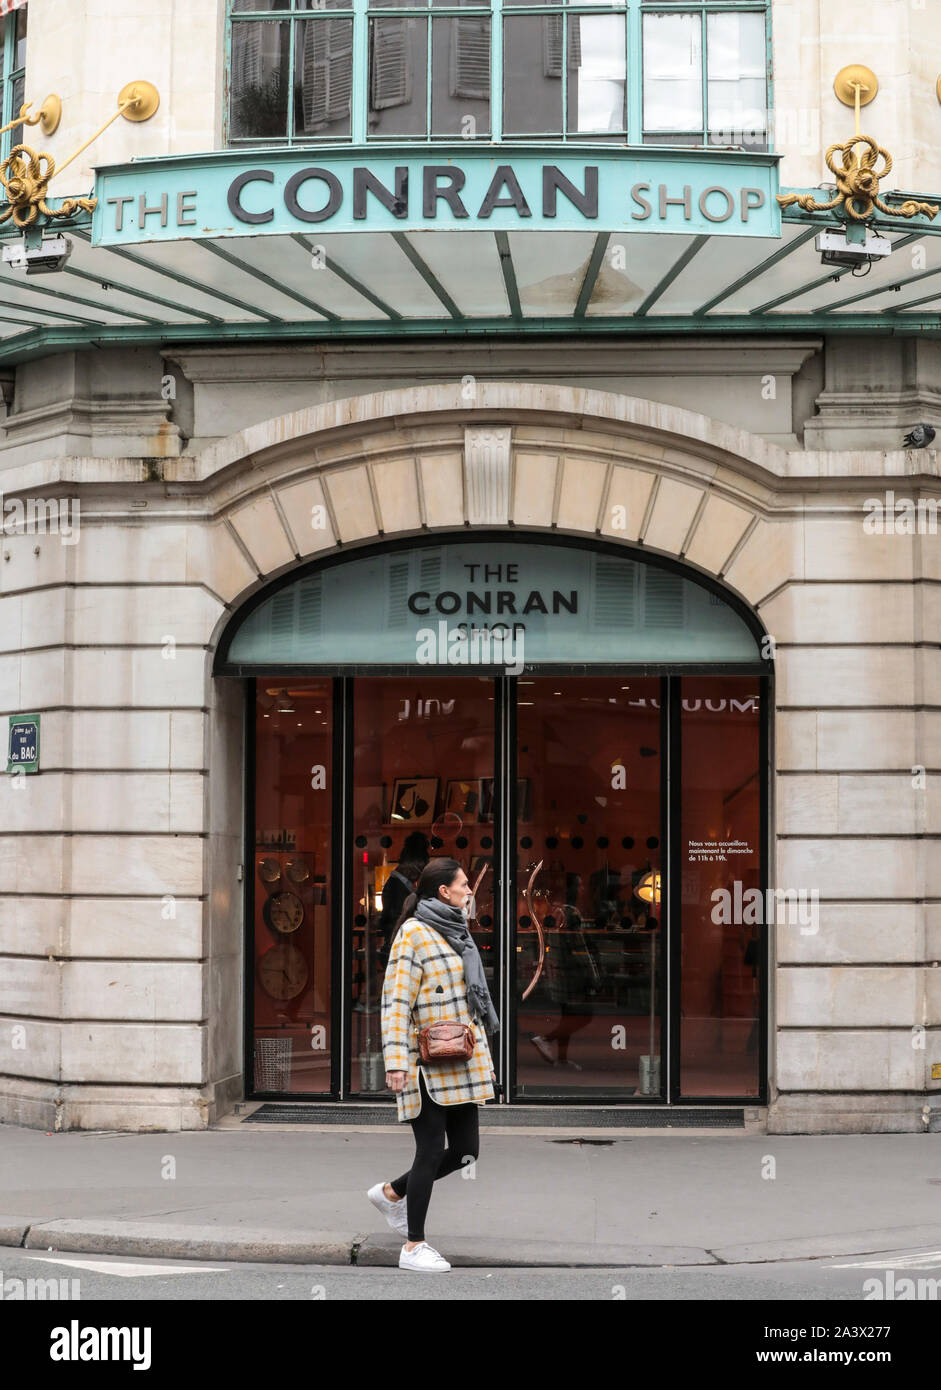 THE CONRAN SHOP A PARIS, RUE DU BAC Stock Photo - Alamy